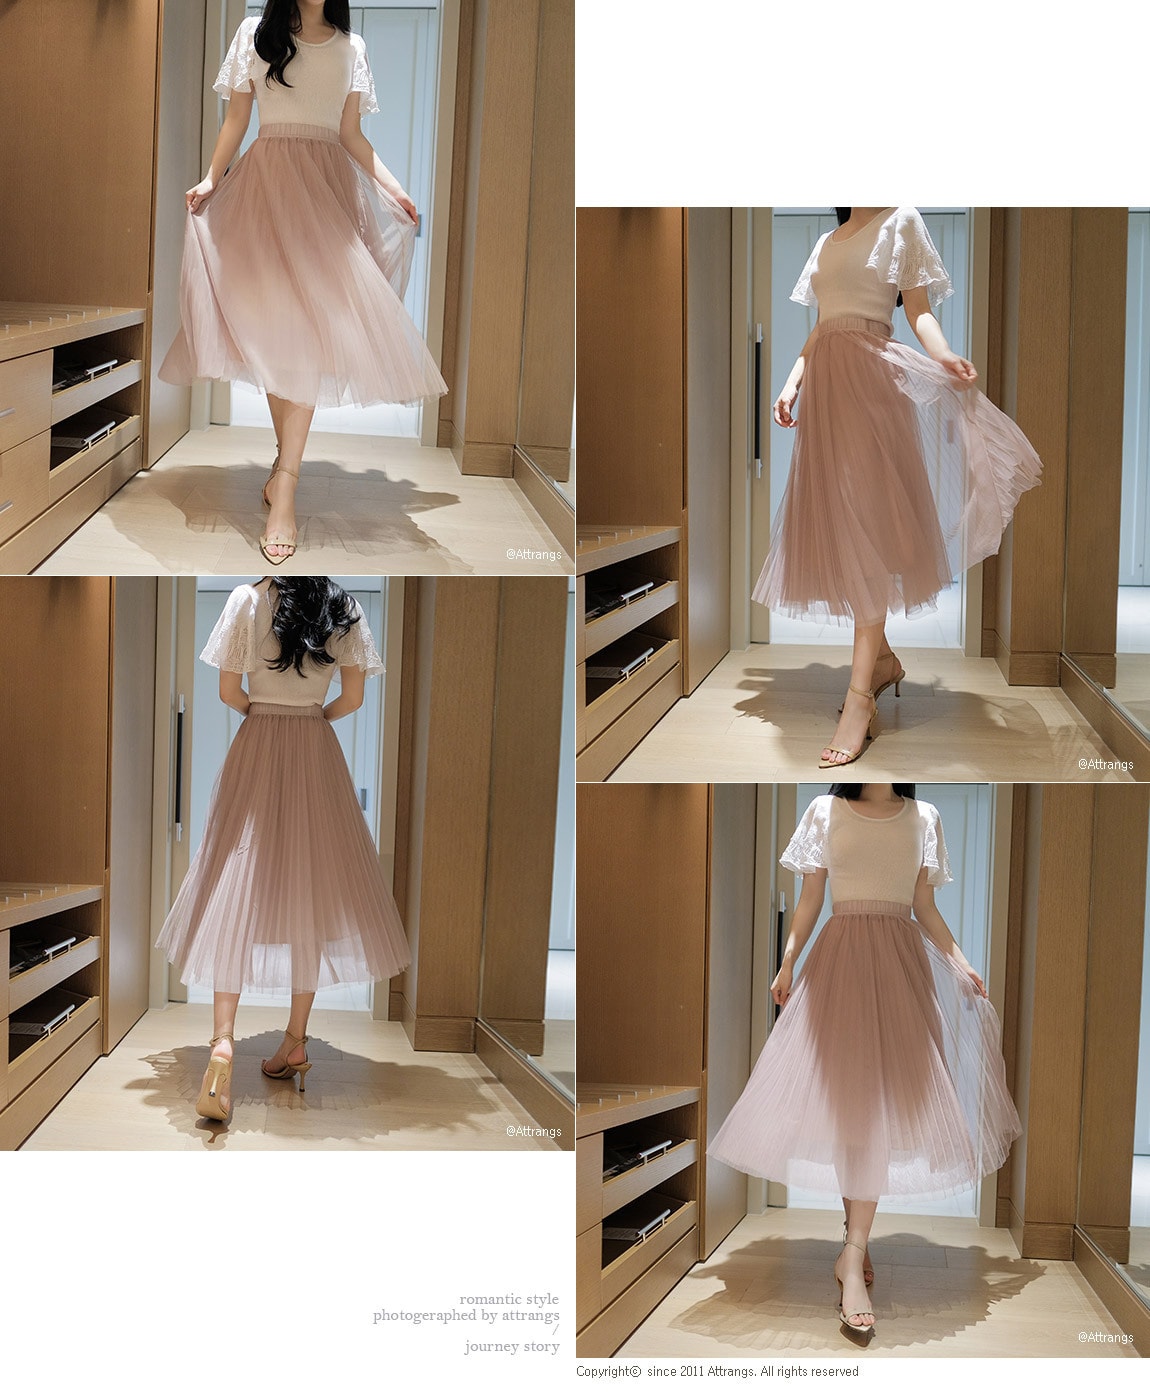 long skirt Pink free size